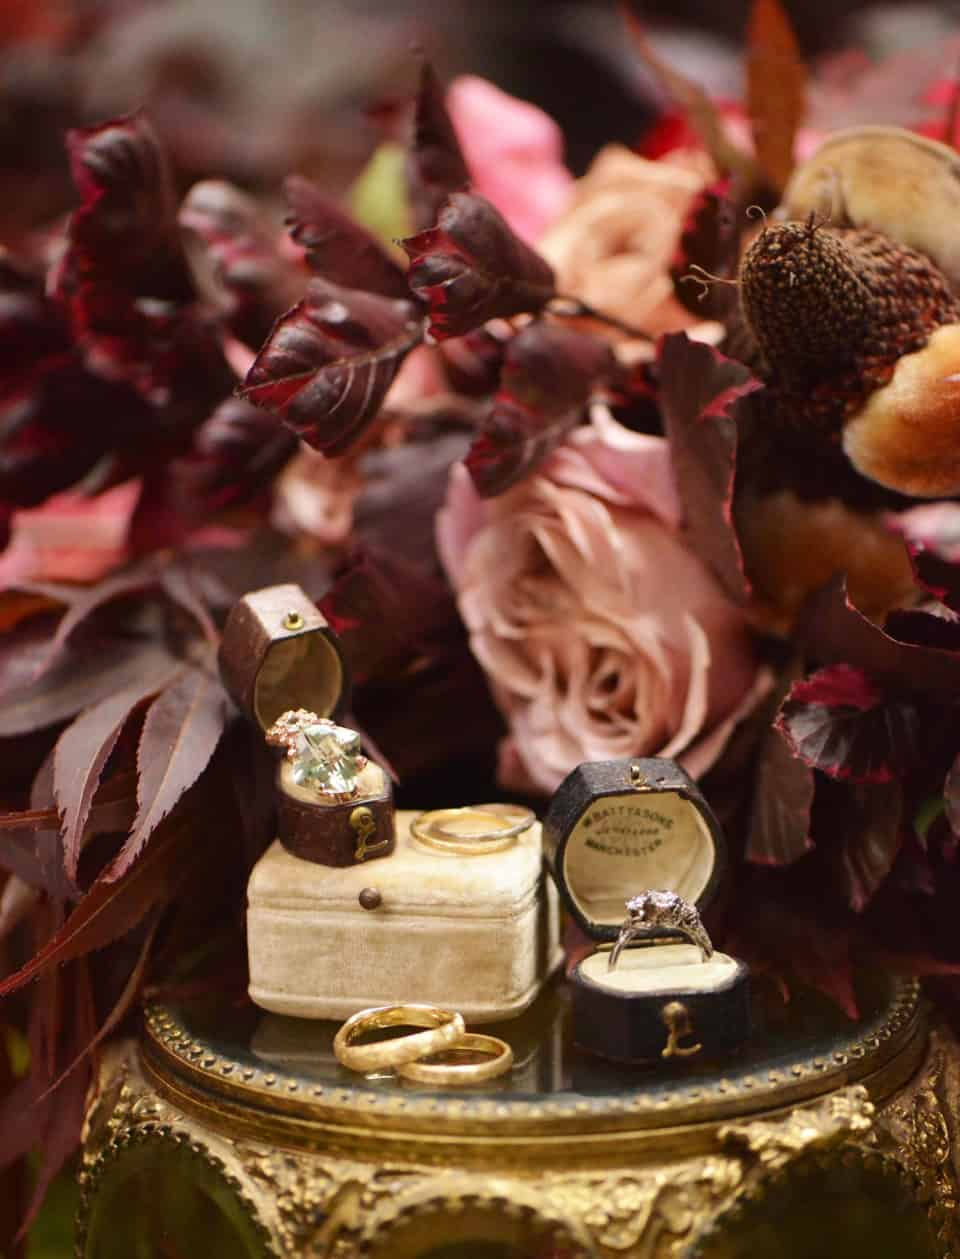 darkly romantic bespoke engagement rings by Julia deVille